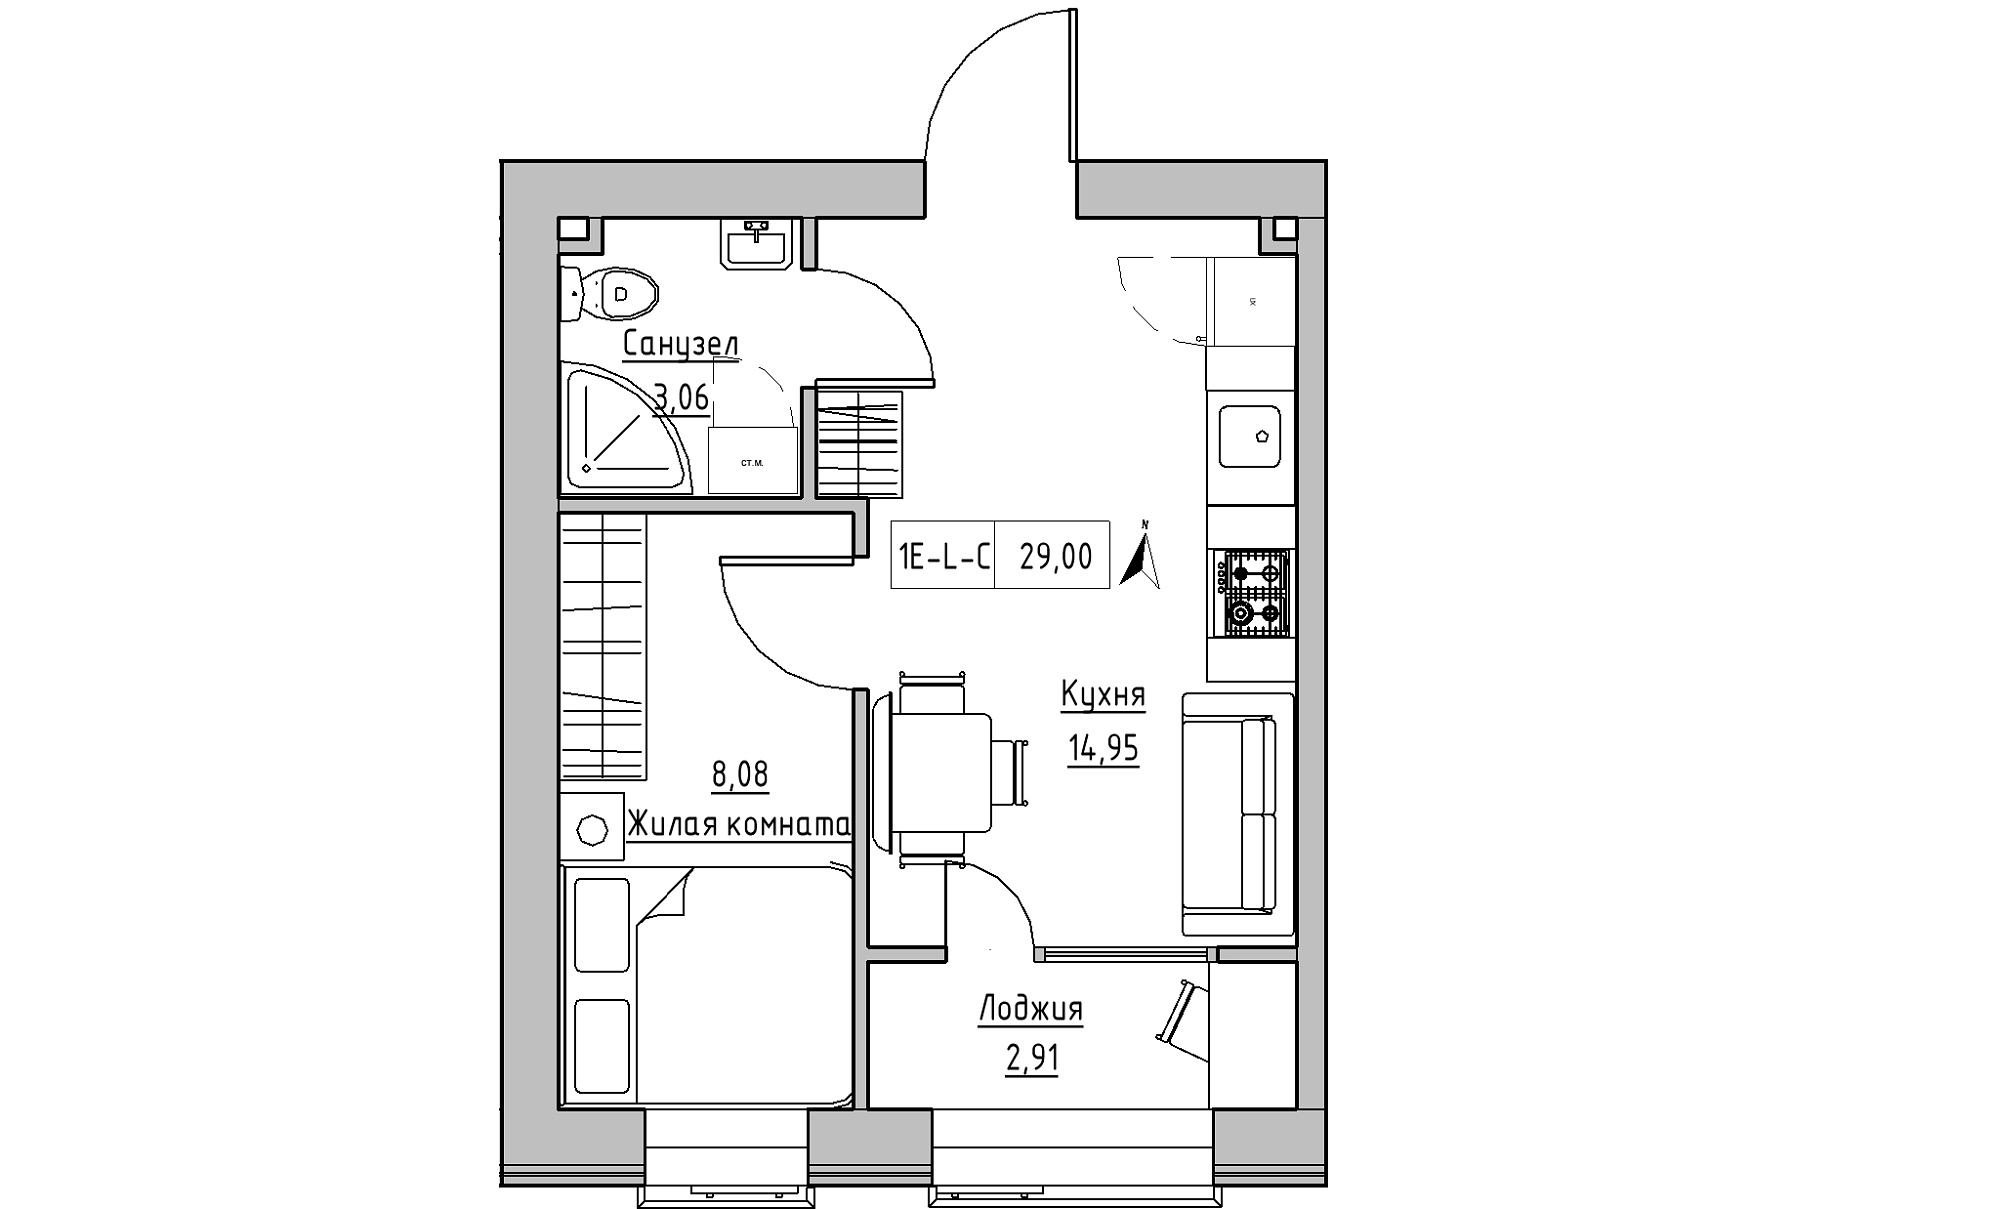 Planning 1-rm flats area 29m2, KS-016-04/0007.